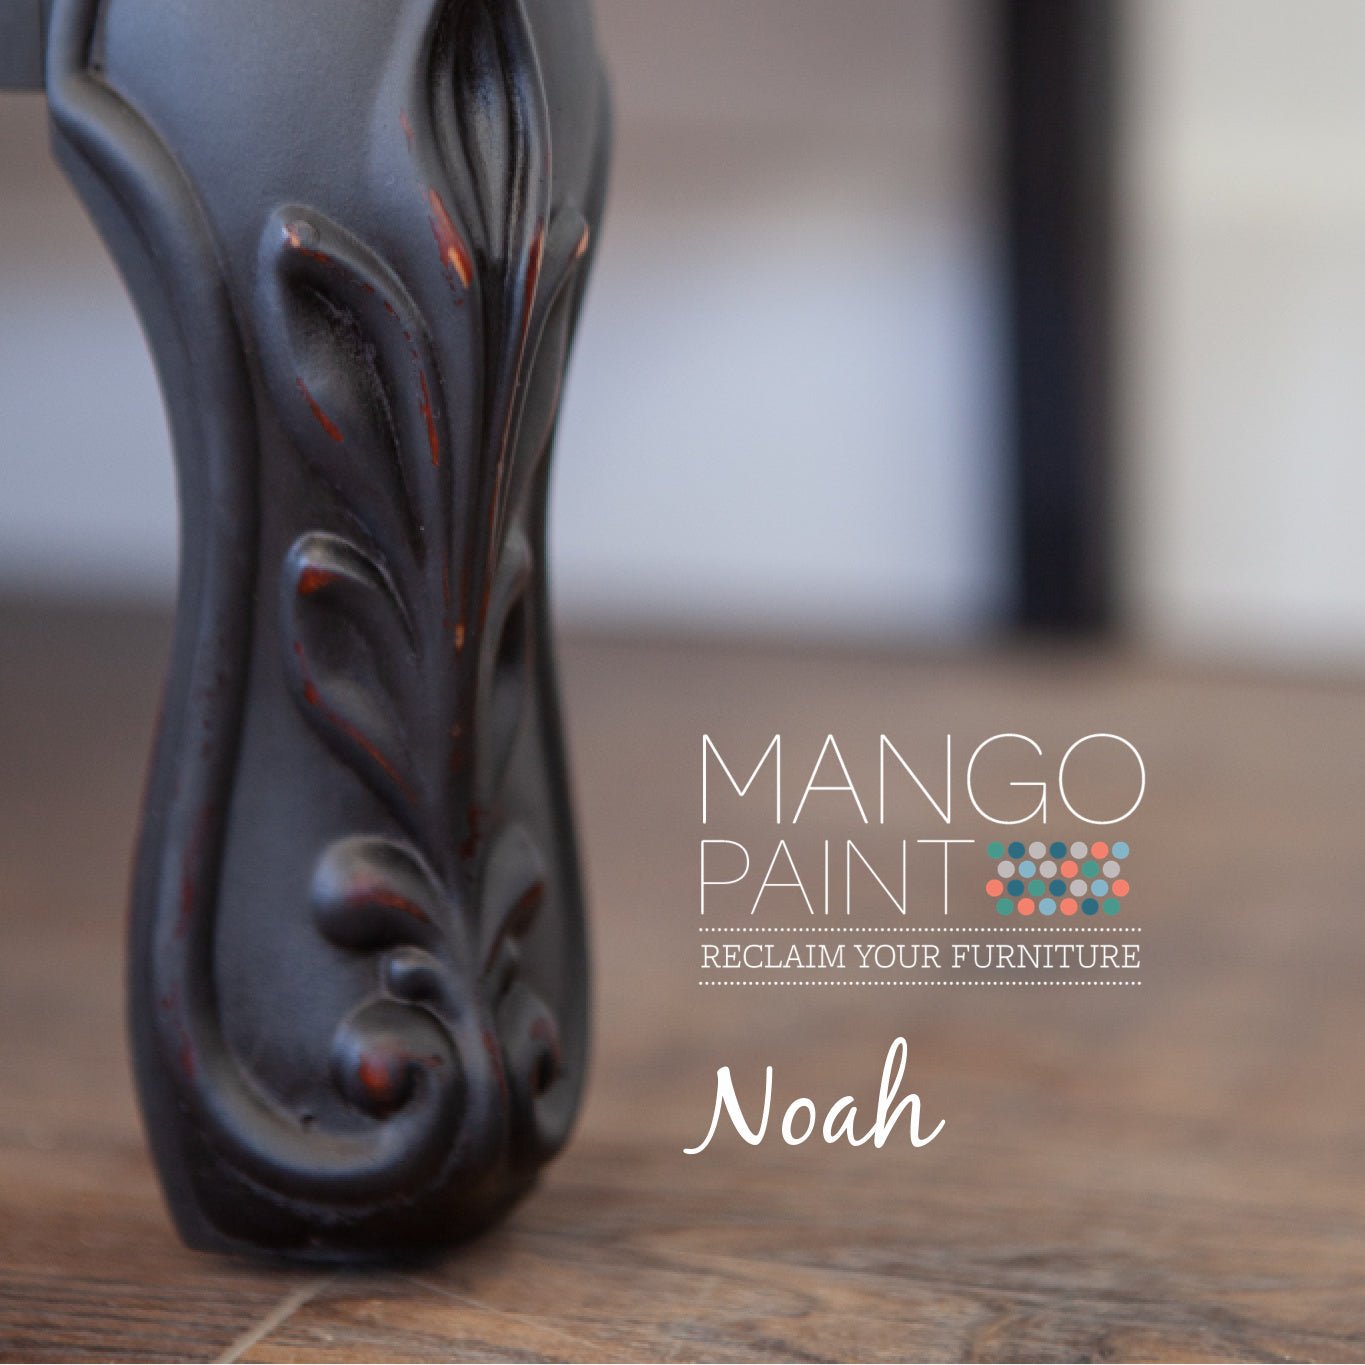 mango paint noah - 3